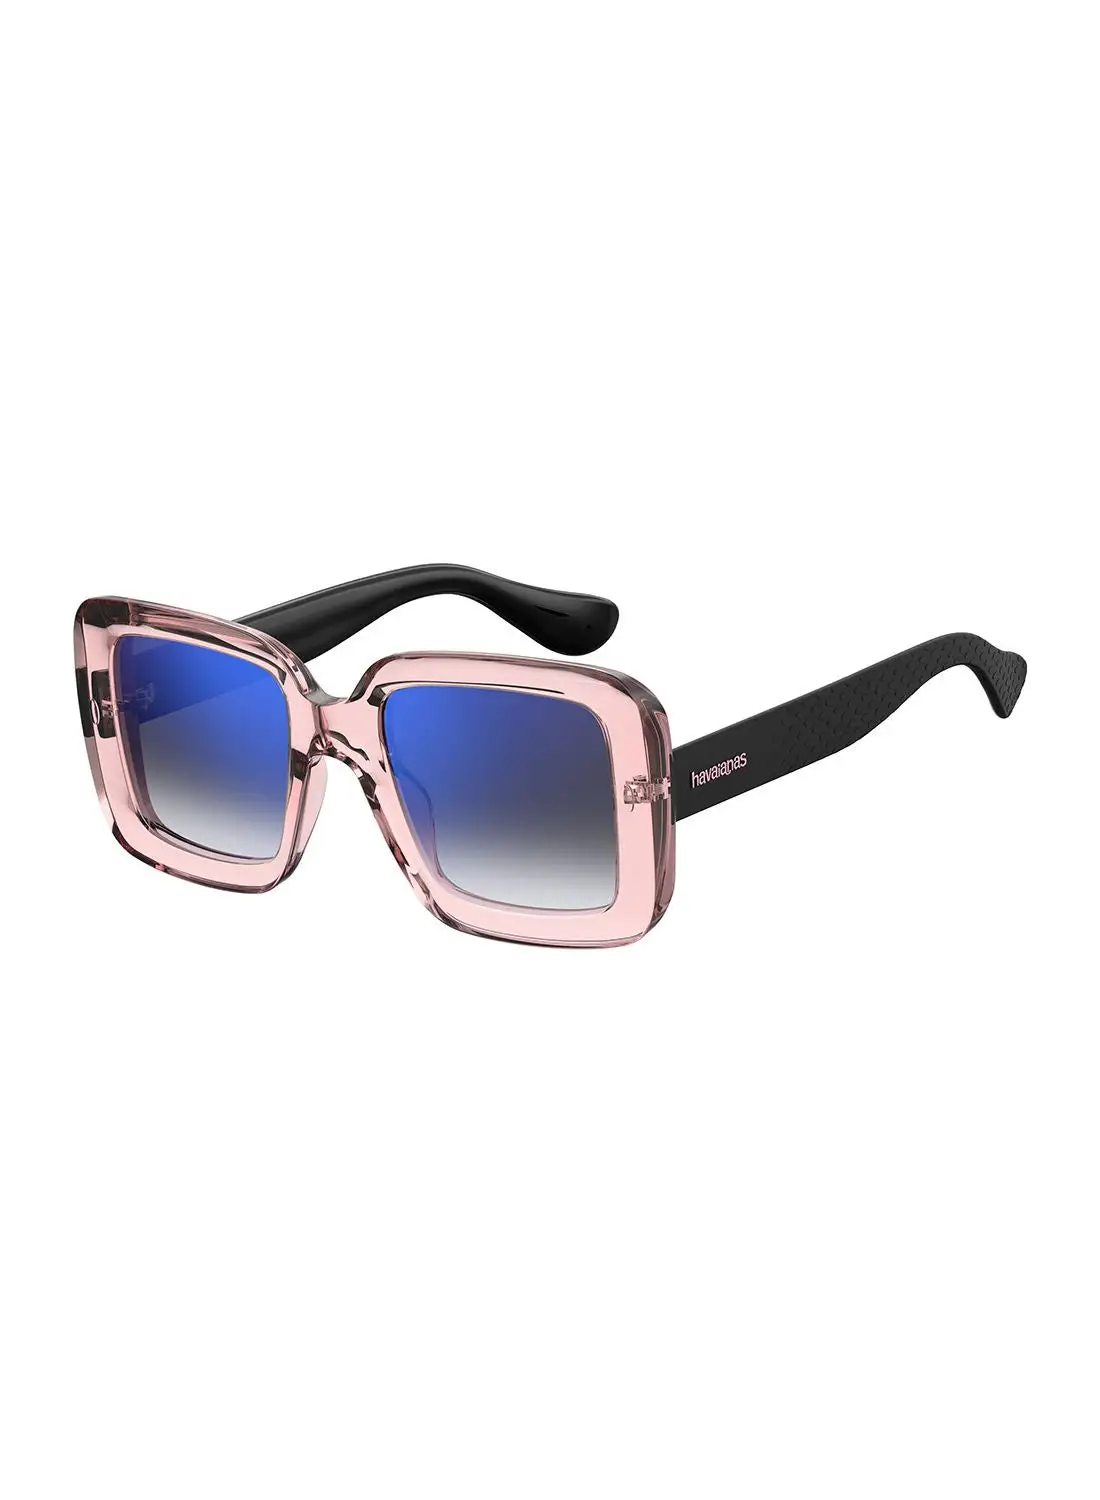 havaianas Women's UV Protection Square Sunglasses - Geriba Pink Blue 53 - Lens Size: 53 Mm